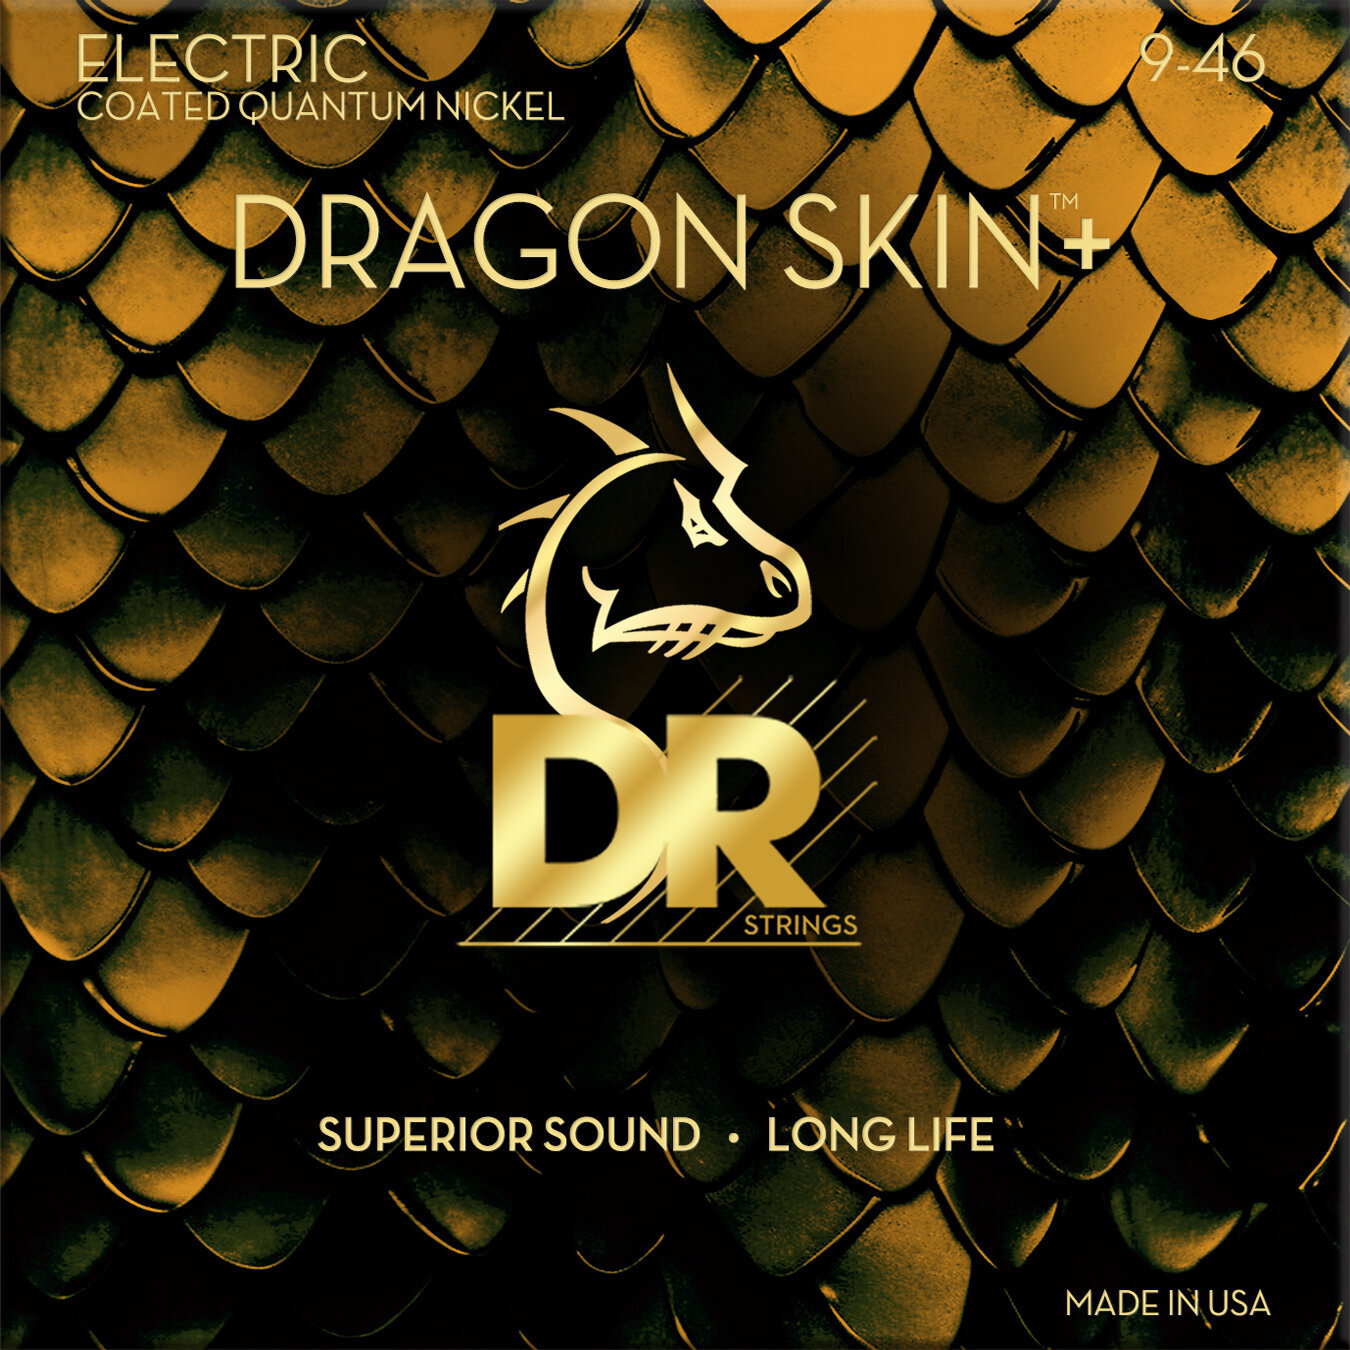 Struny pro elektrickou kytaru DR Strings Dragon Skin+ Coated Light to Medium 9-46